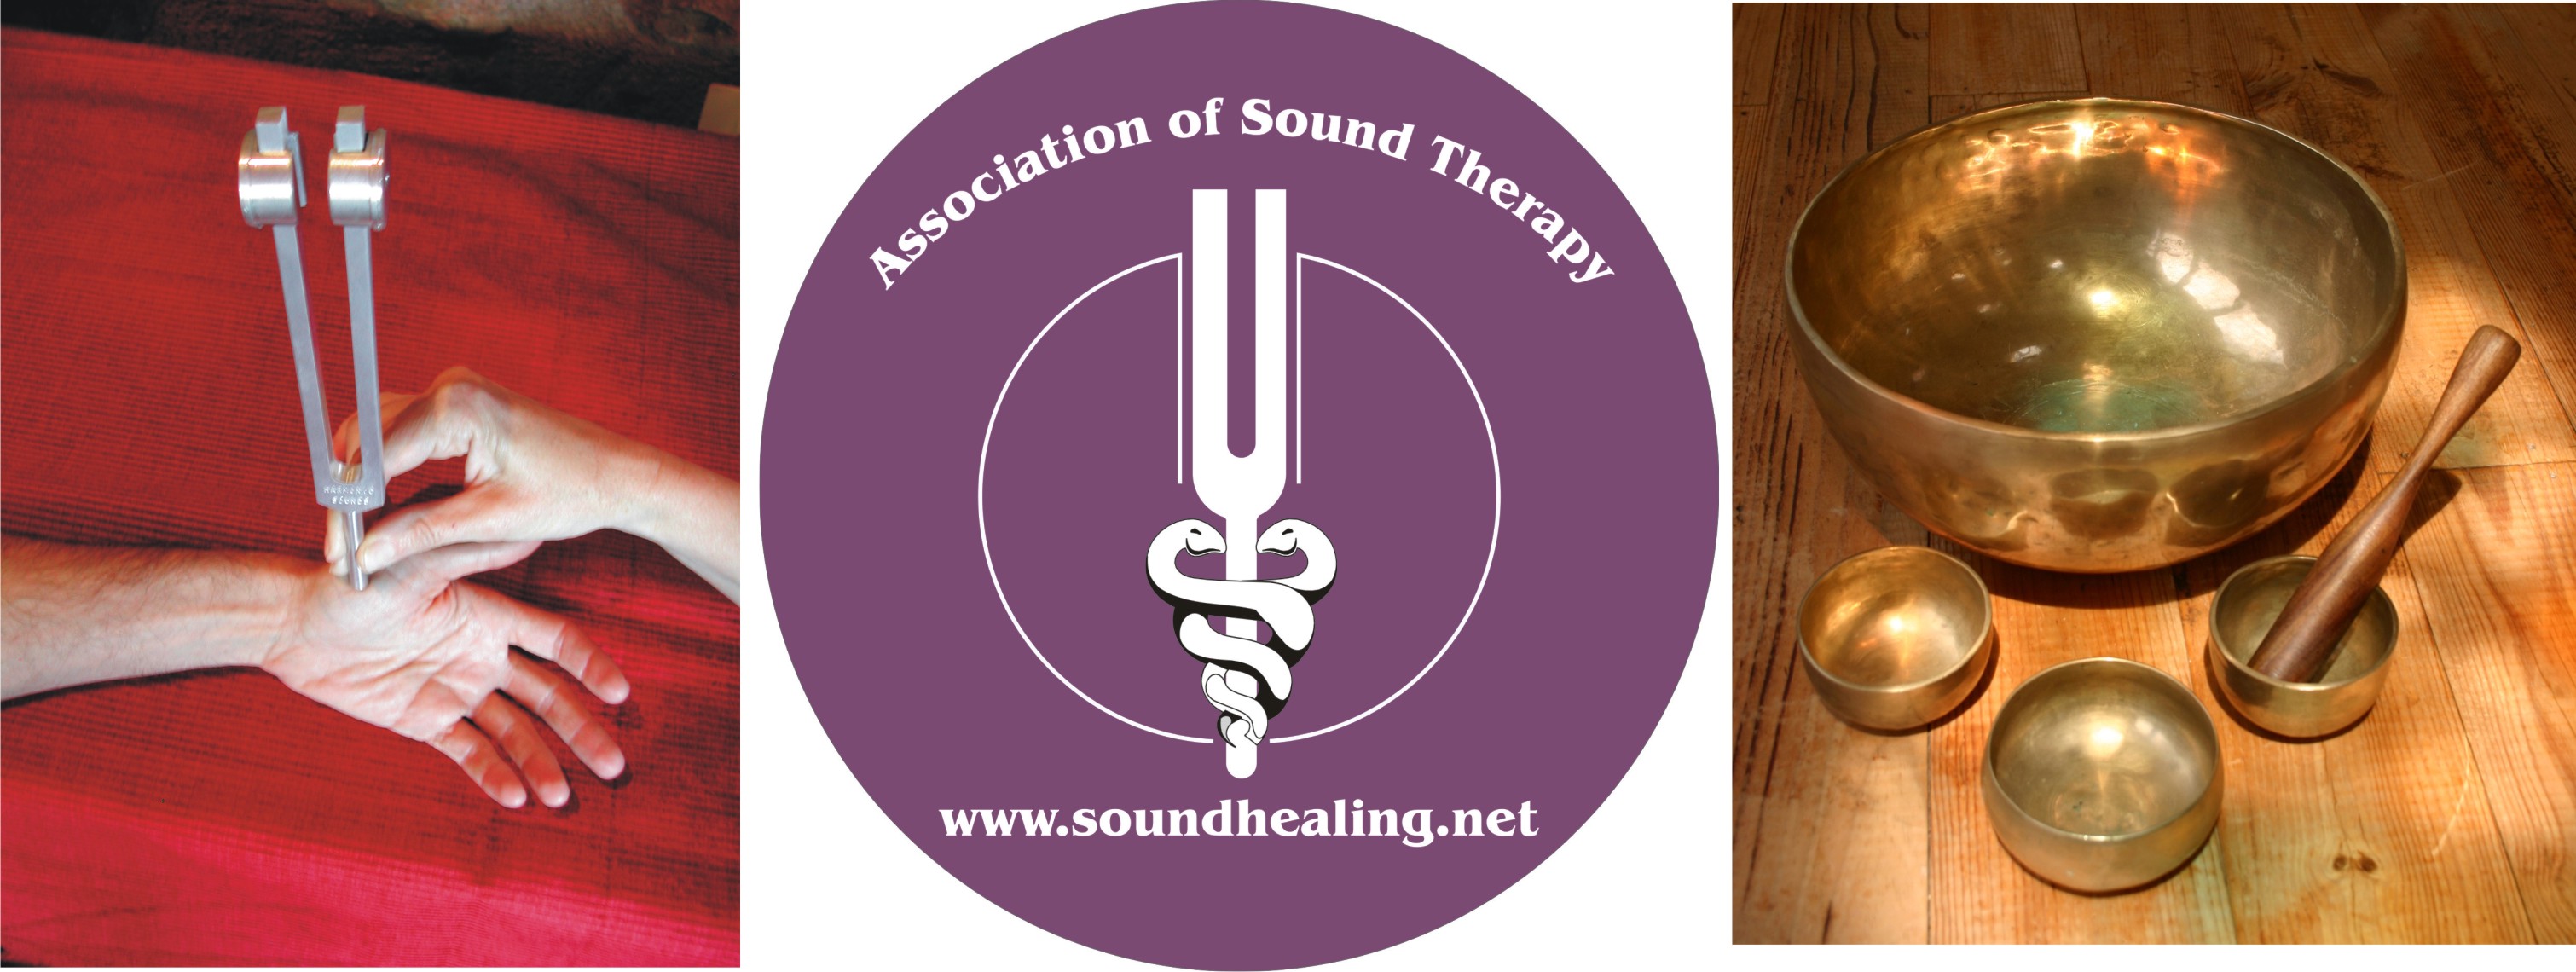 ALICANTE PROVINCE  - 19th International Summer Sound Healing Intensive